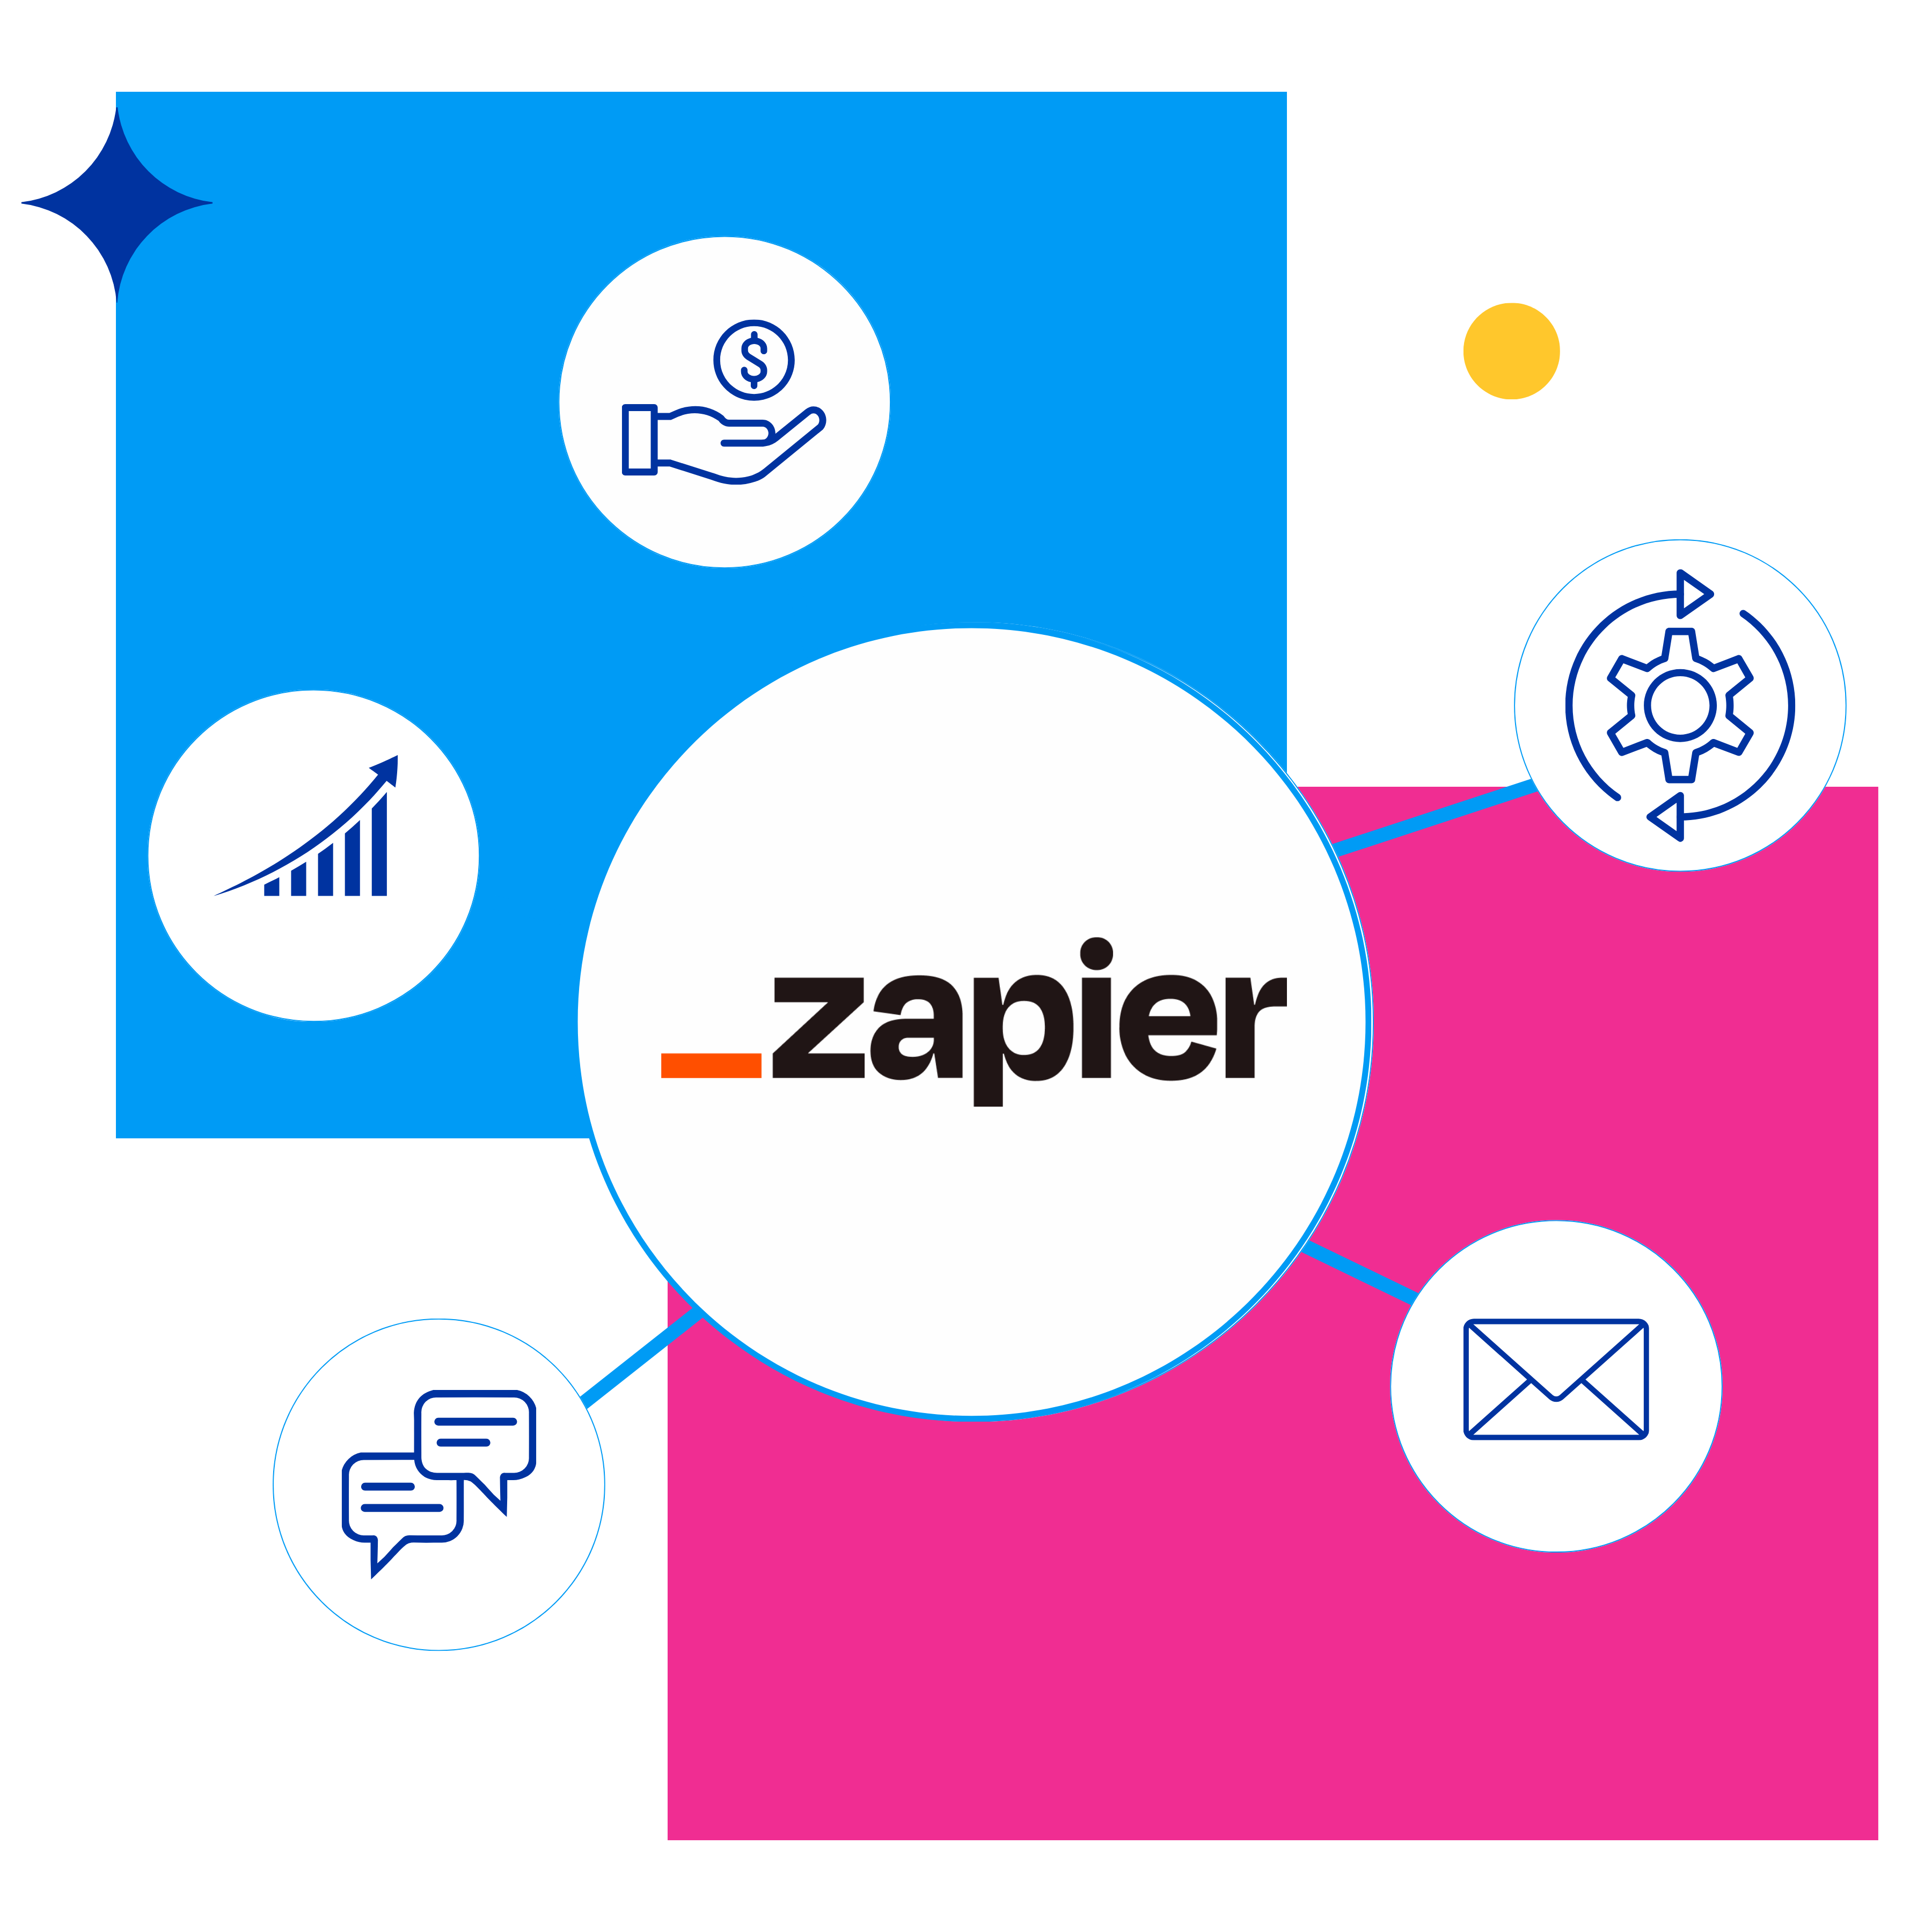 zapier and jackrabbit integration image icons blue pink